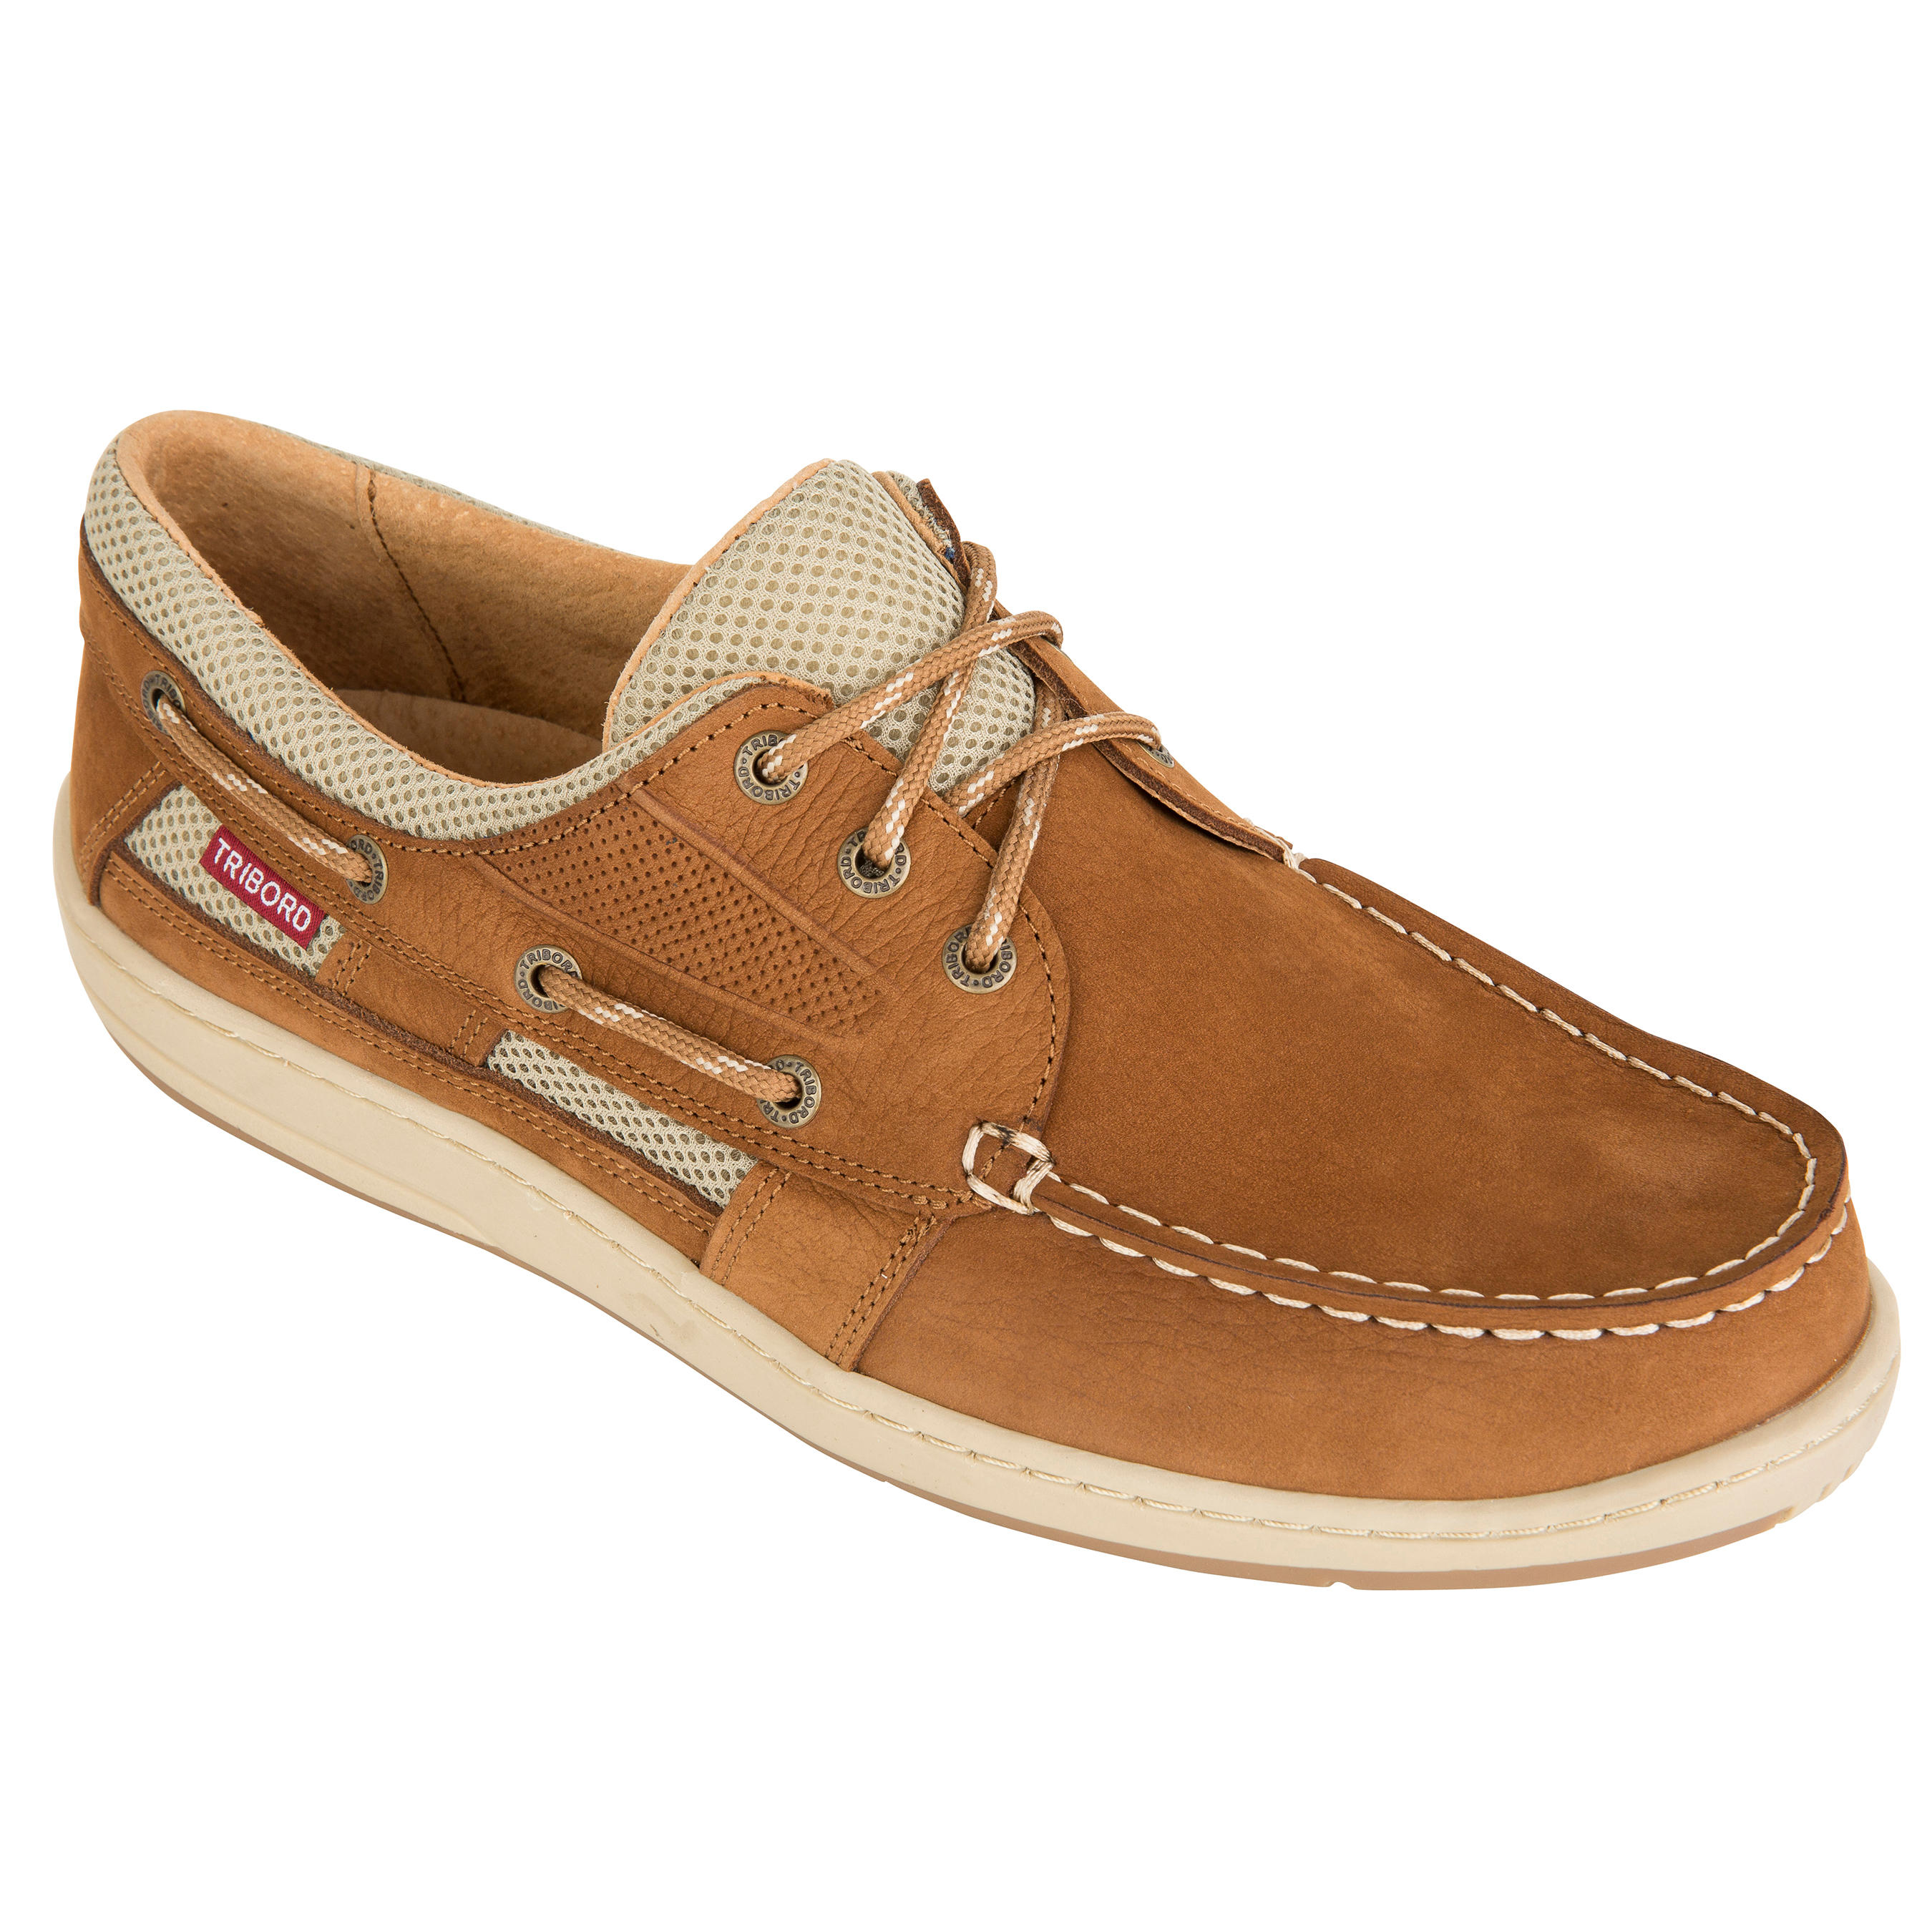 TRIBORD CLIPPER men's boat shoes - dark brown